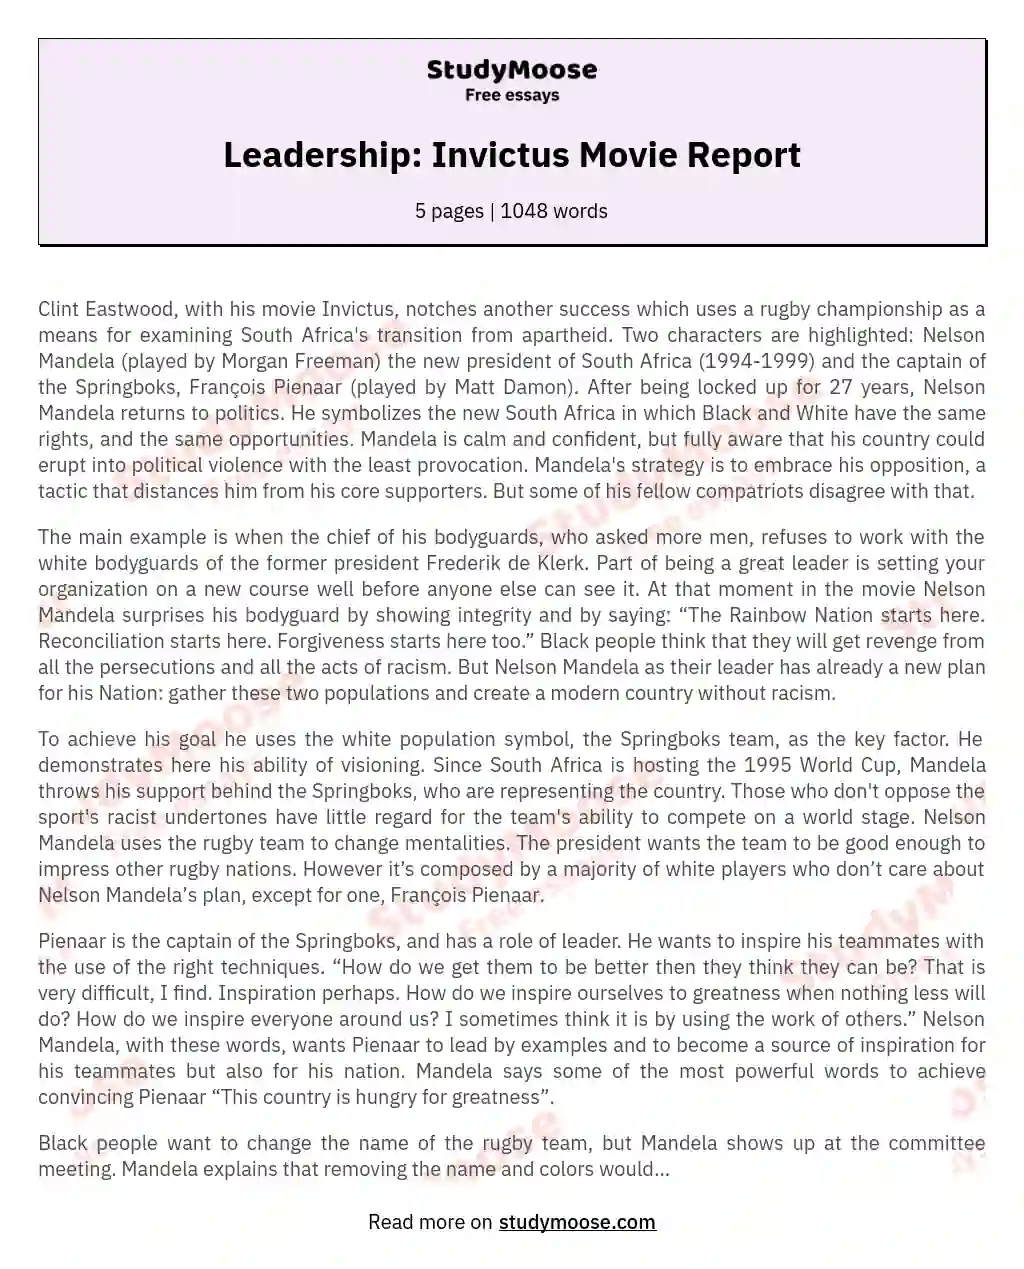 Leadership: Invictus Movie Report essay